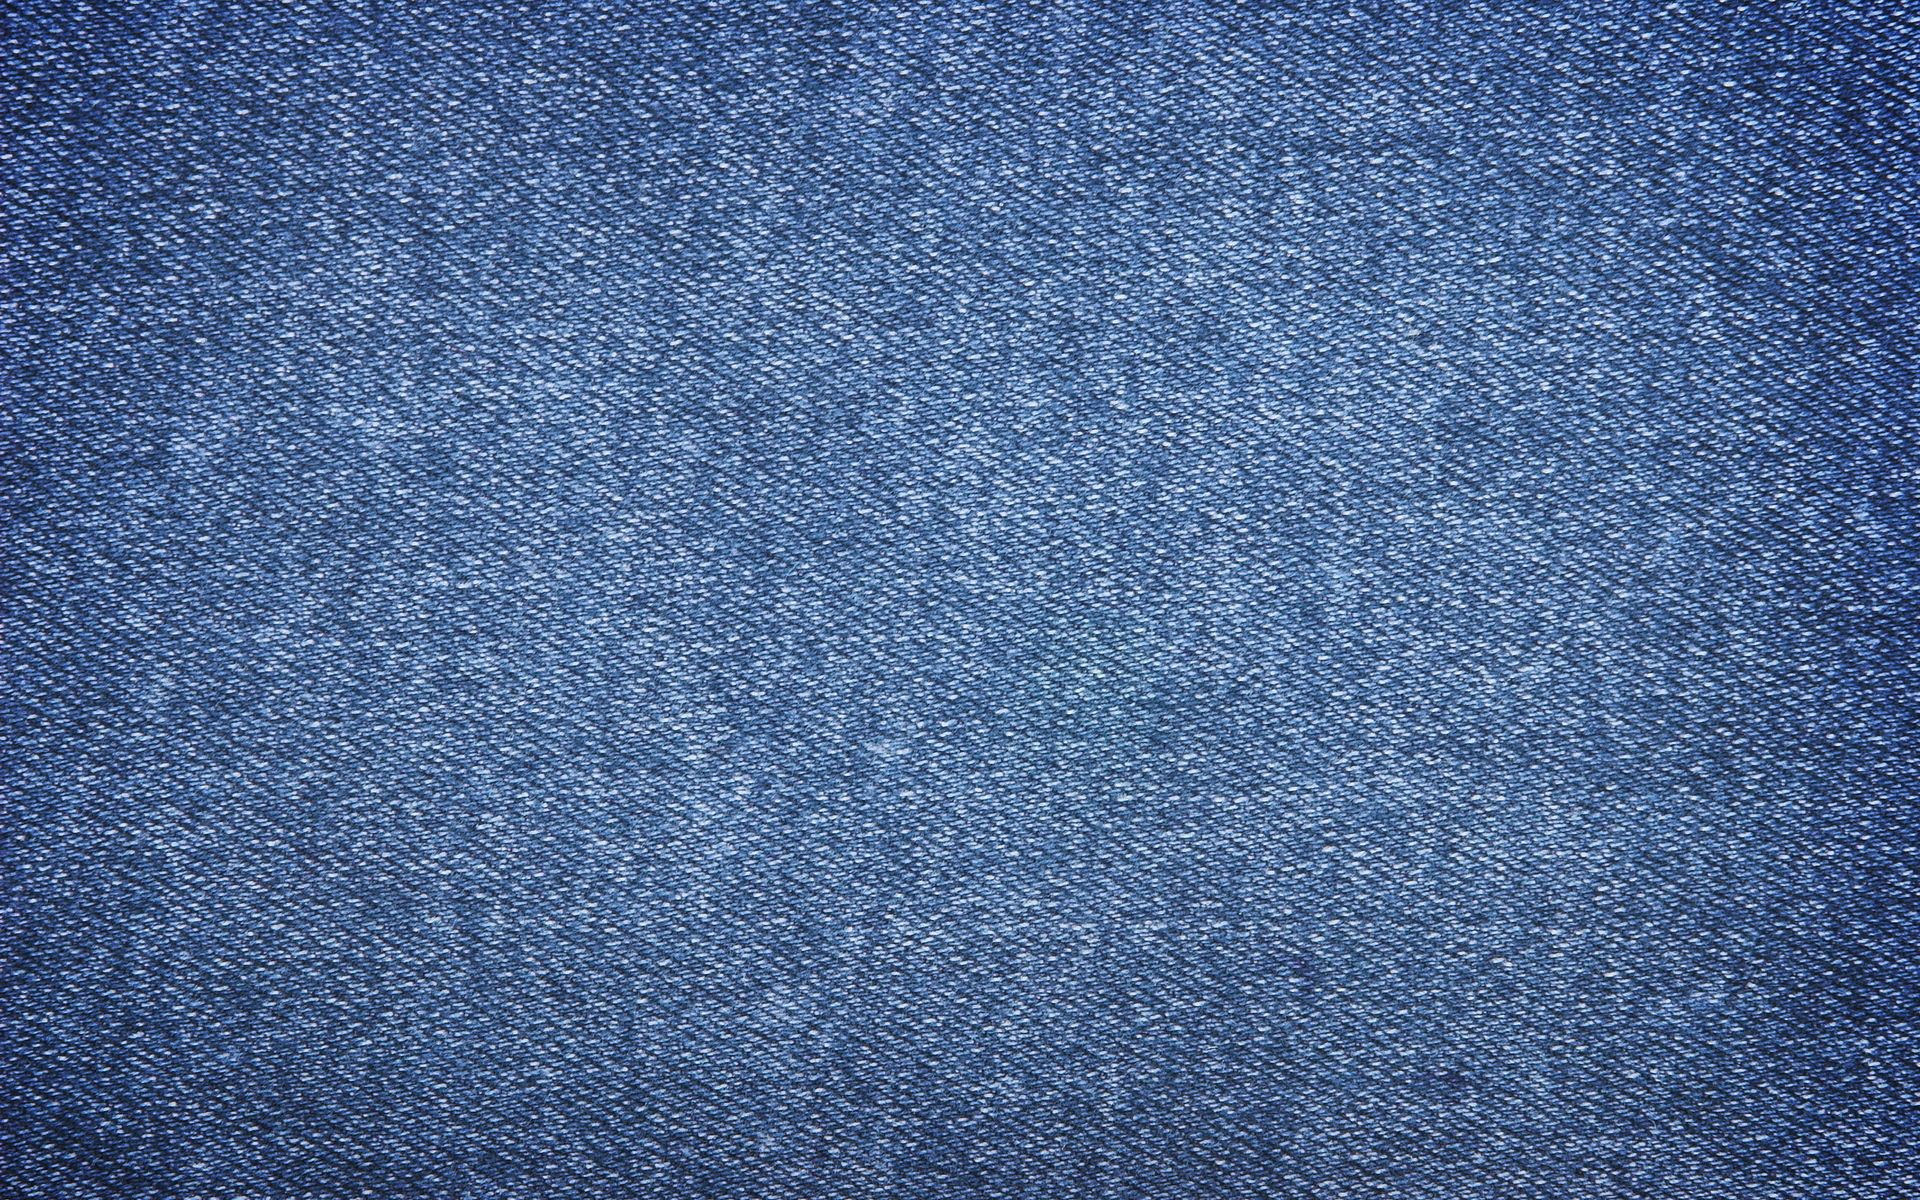 Jeans Phone Wallpaper